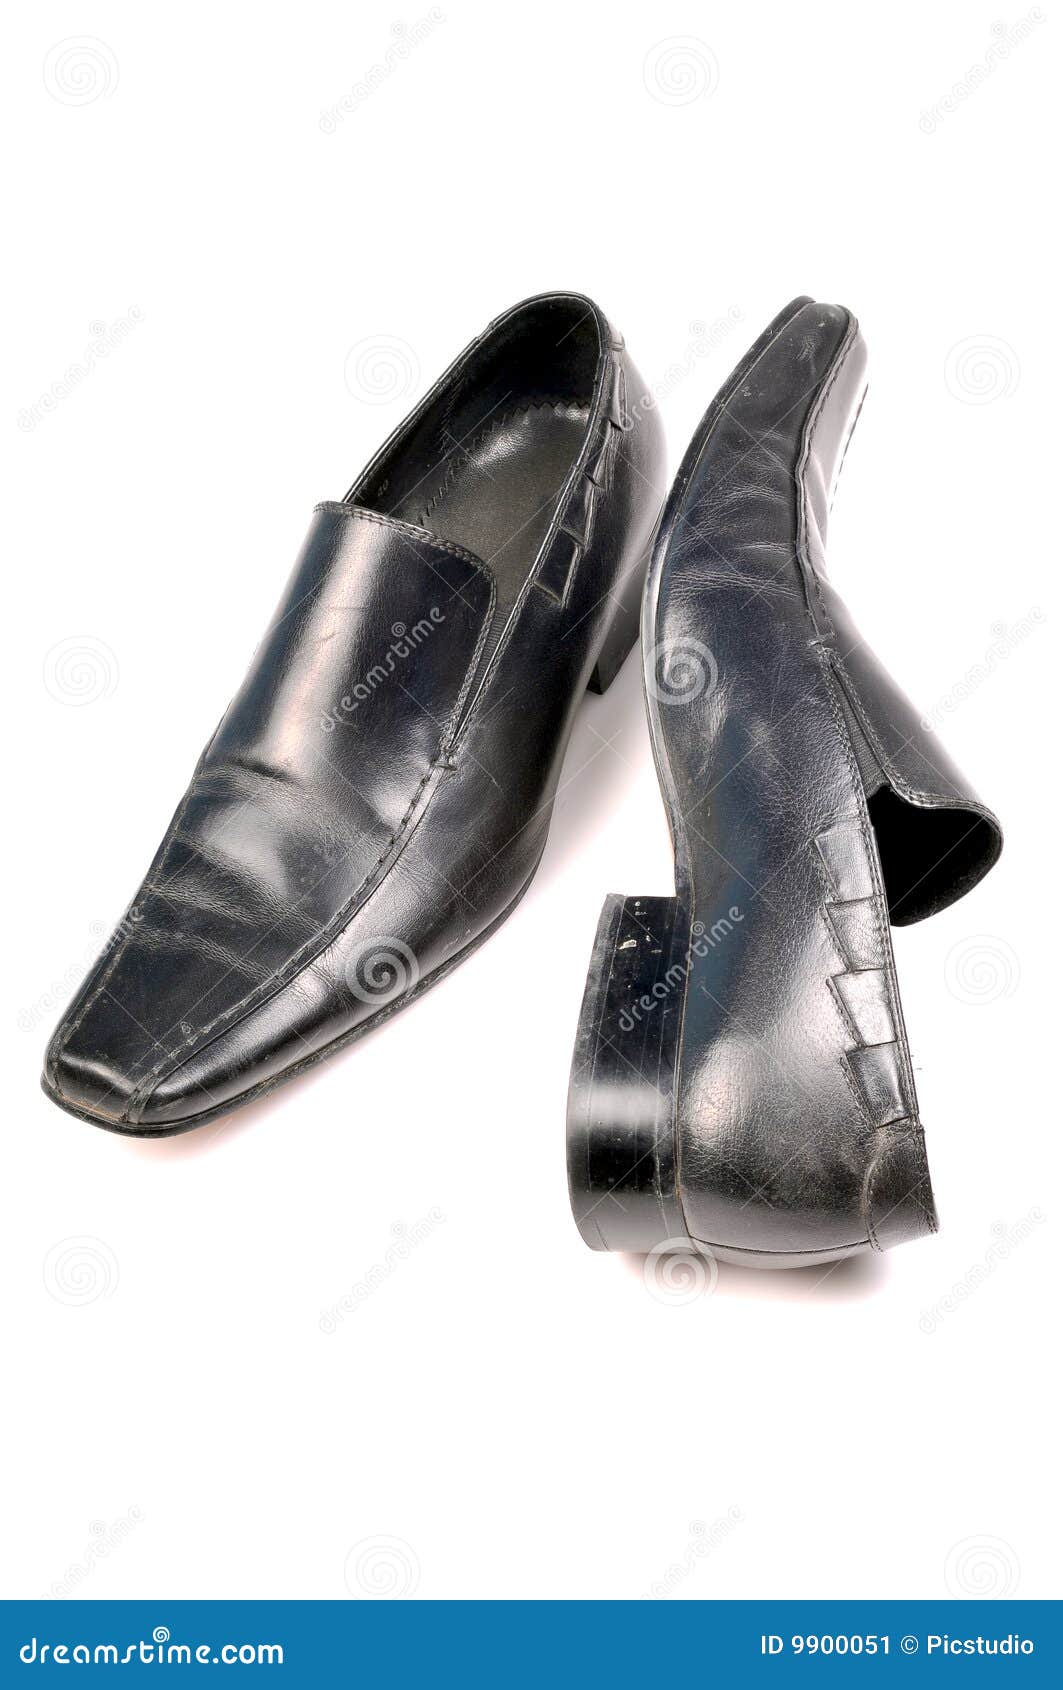 Black formal shoes stock image. Image of shine, slip, comfortable - 9900051